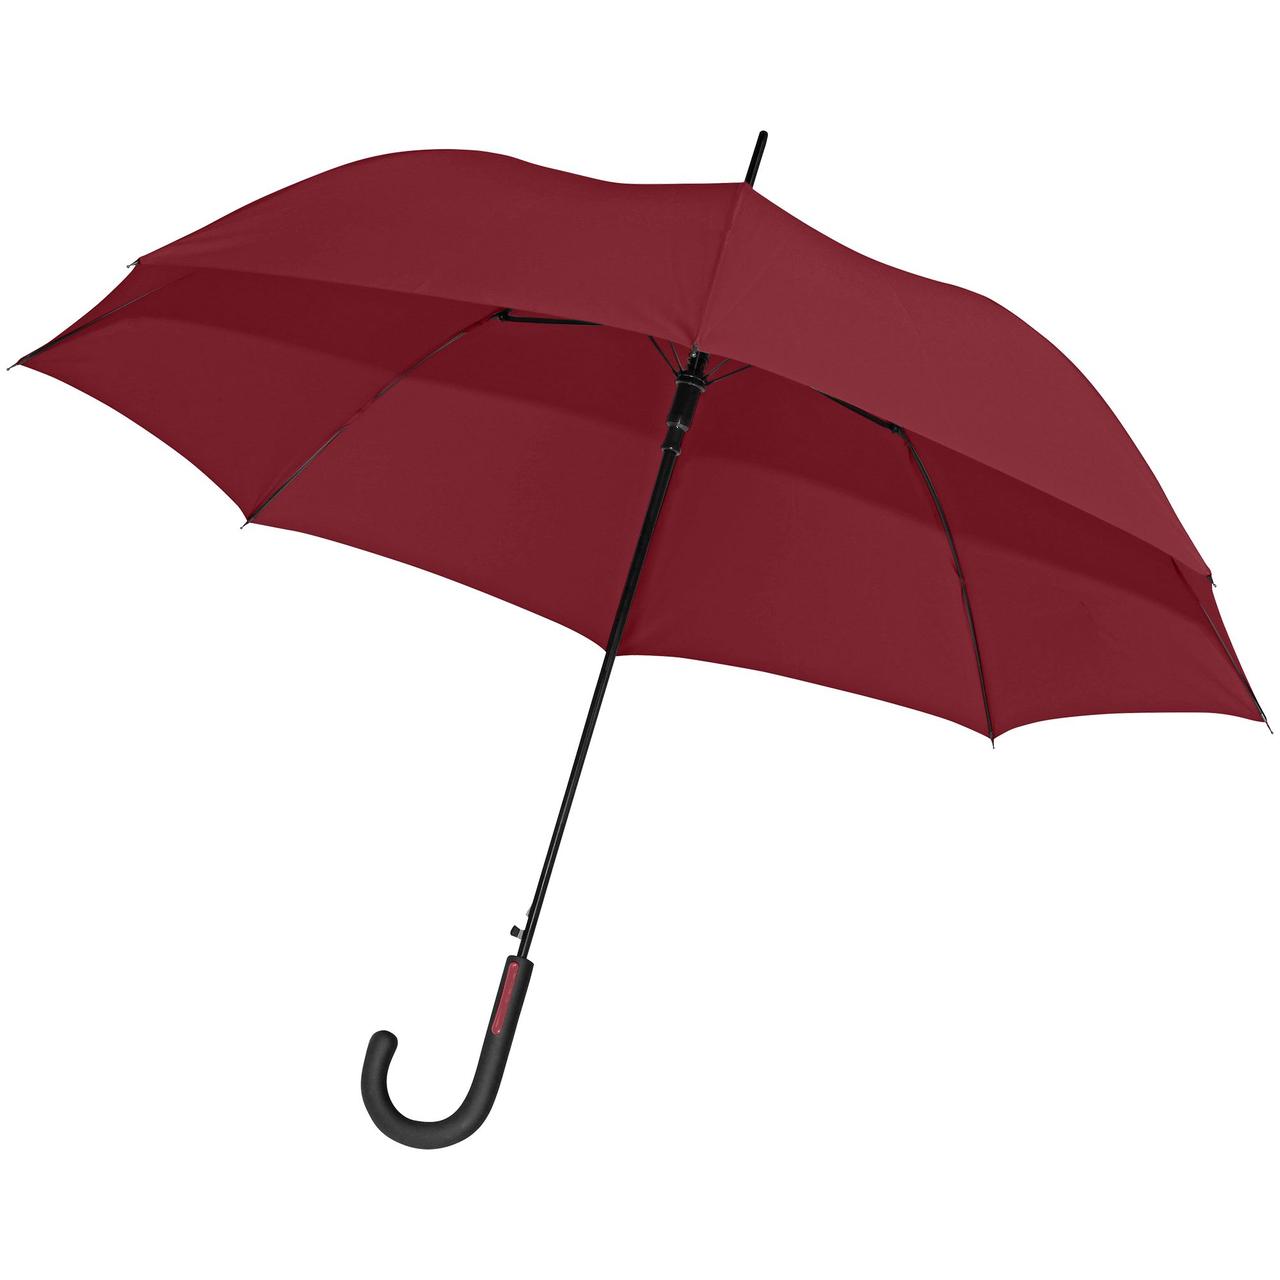 Зонт-трость Glasgow, бордовый (артикул 11846.55), фото 1